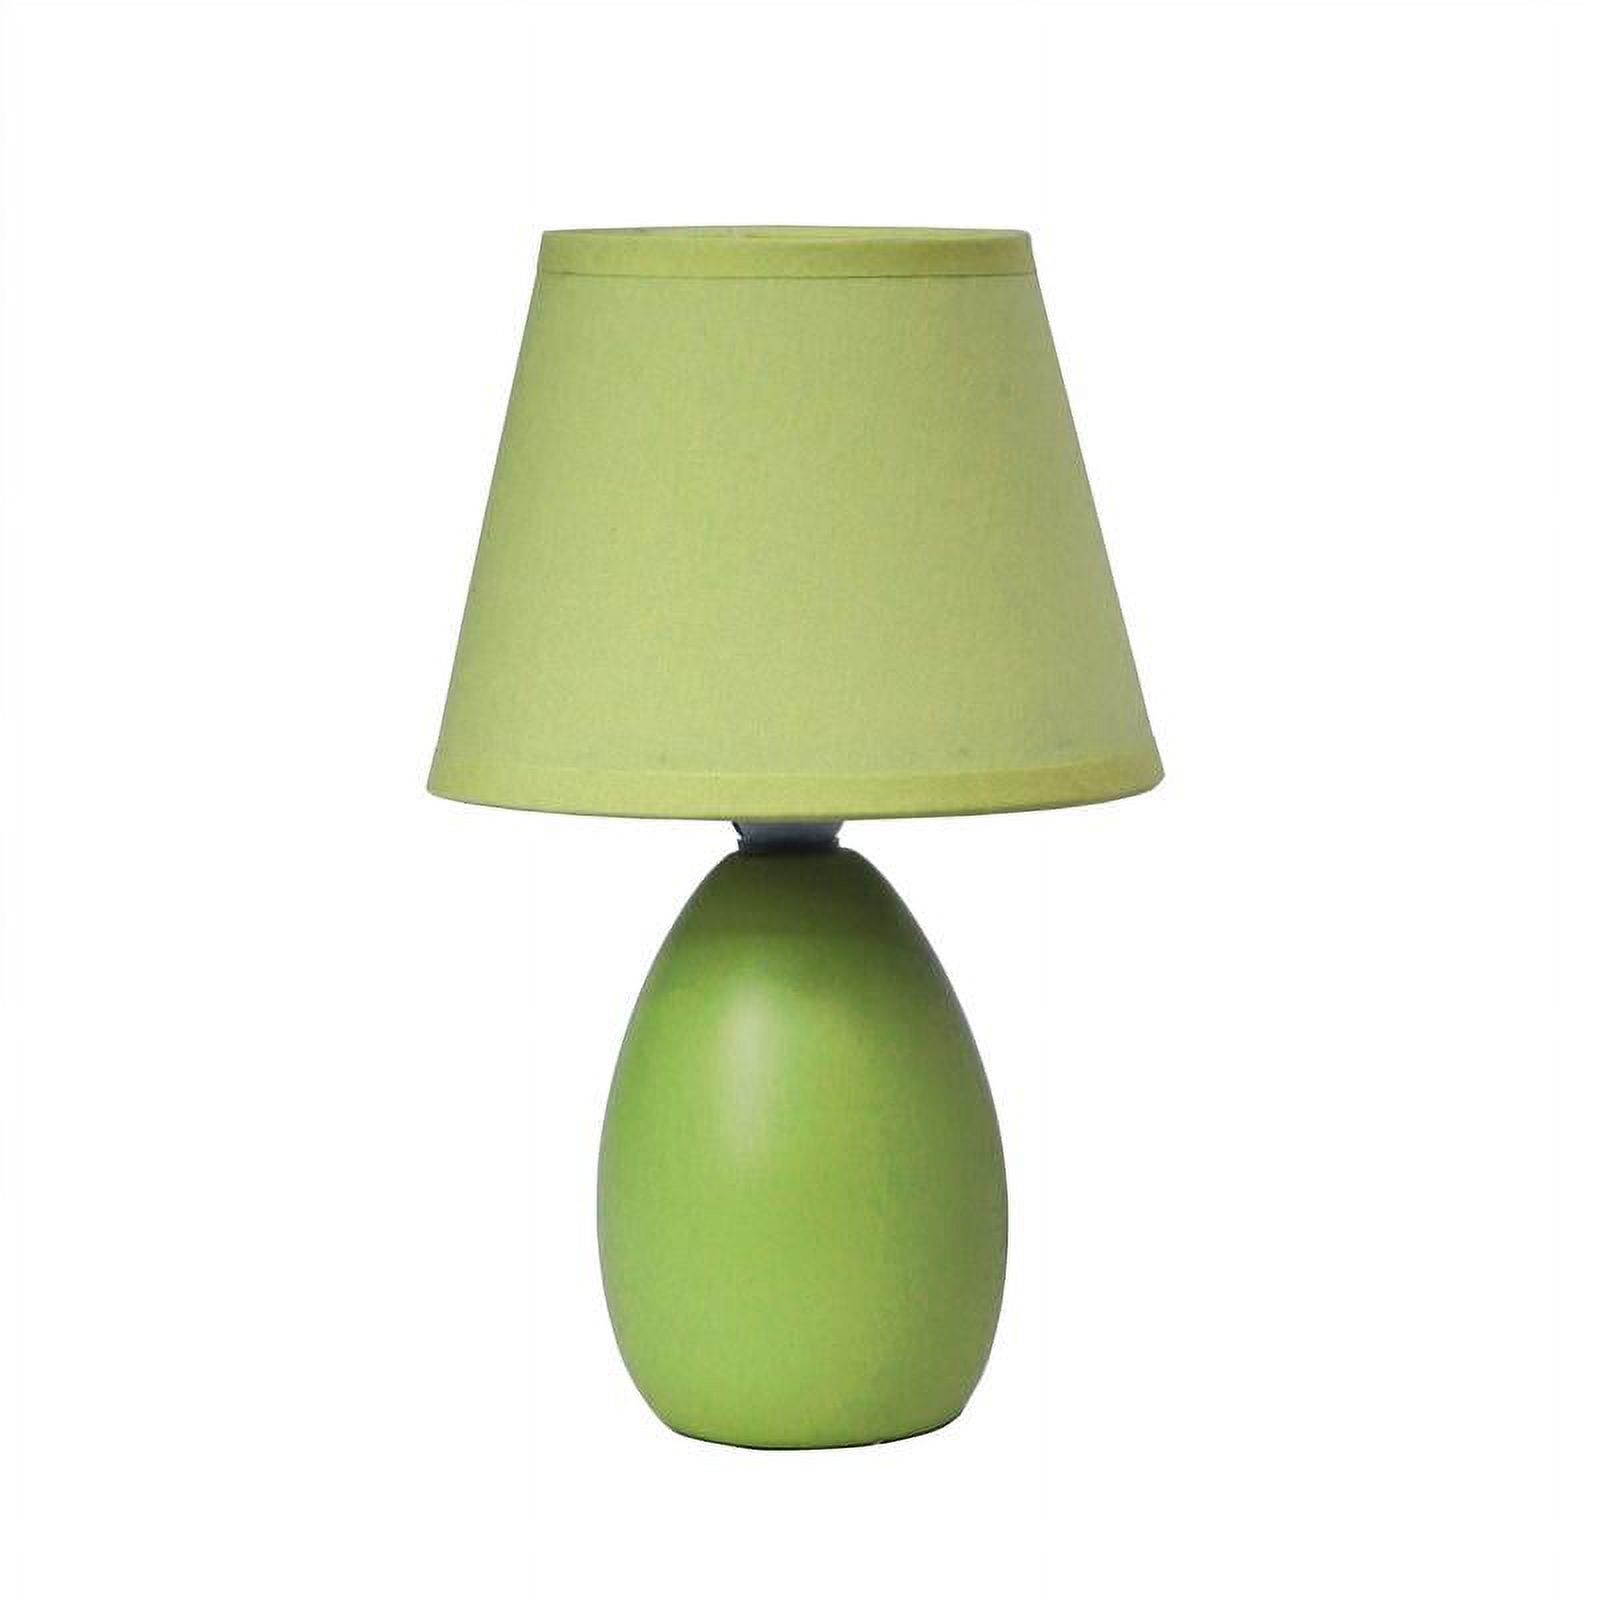 Simple Designs Mini Egg Oval Ceramic Table Lamp, Green - image 1 of 2